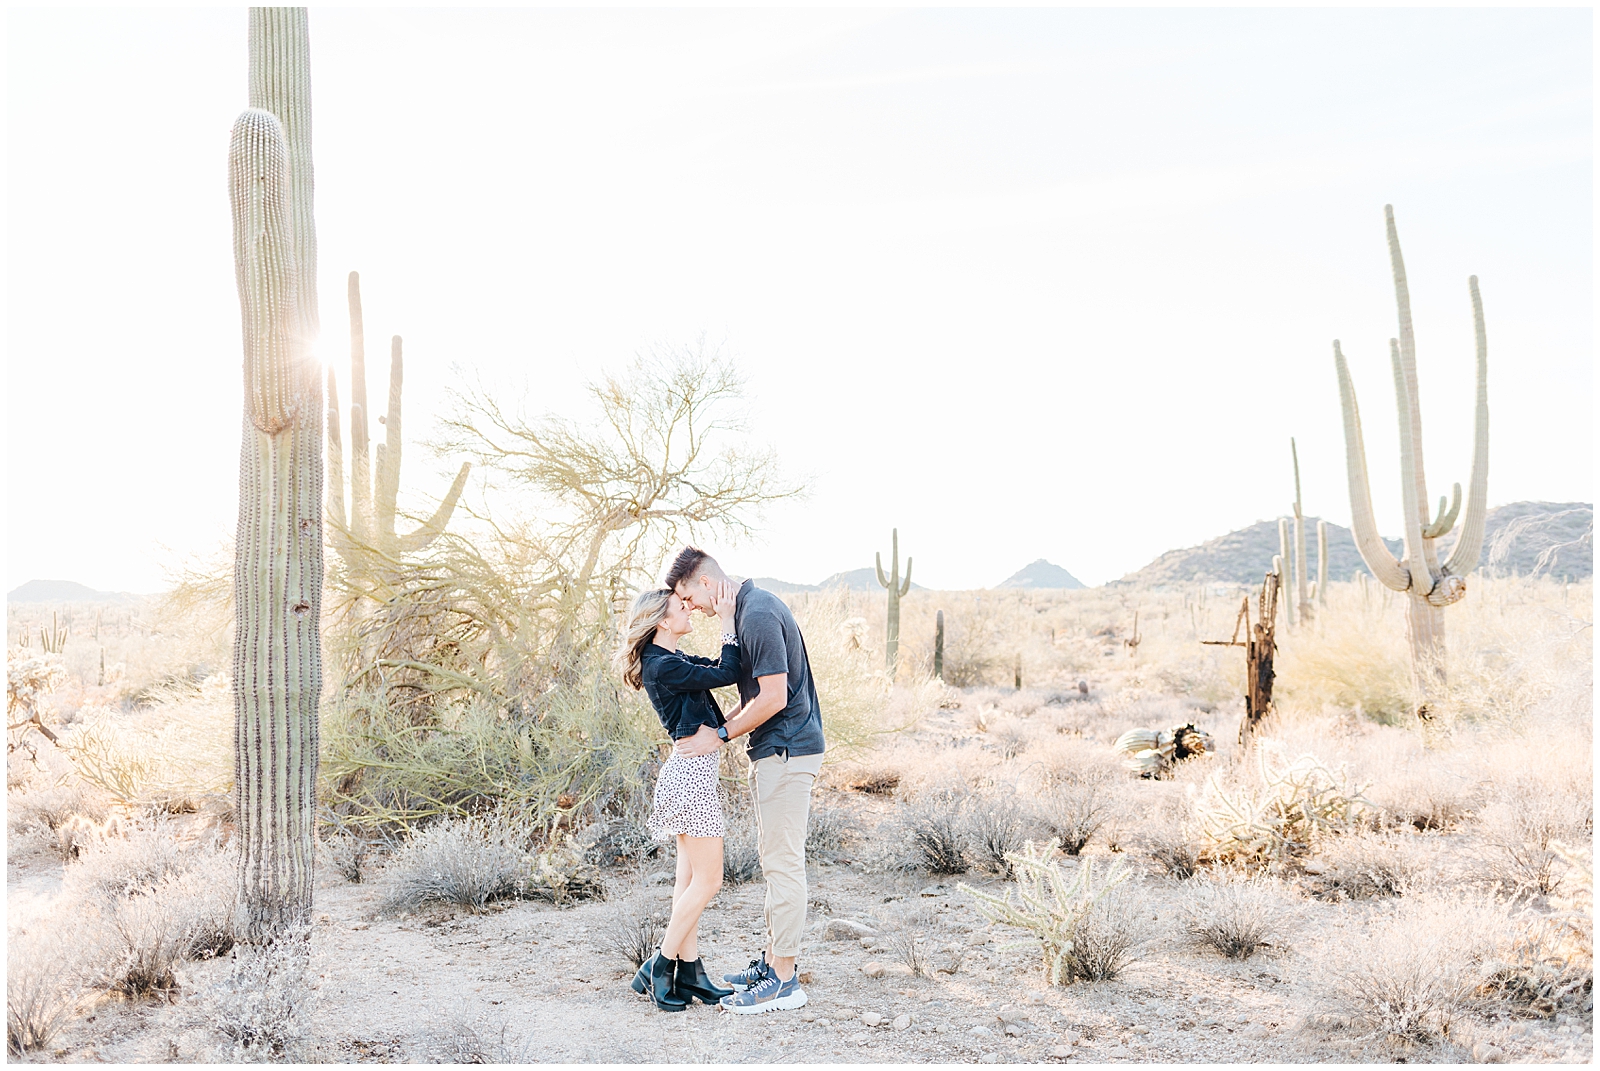 Arizona Photographer - Desert Couples Session